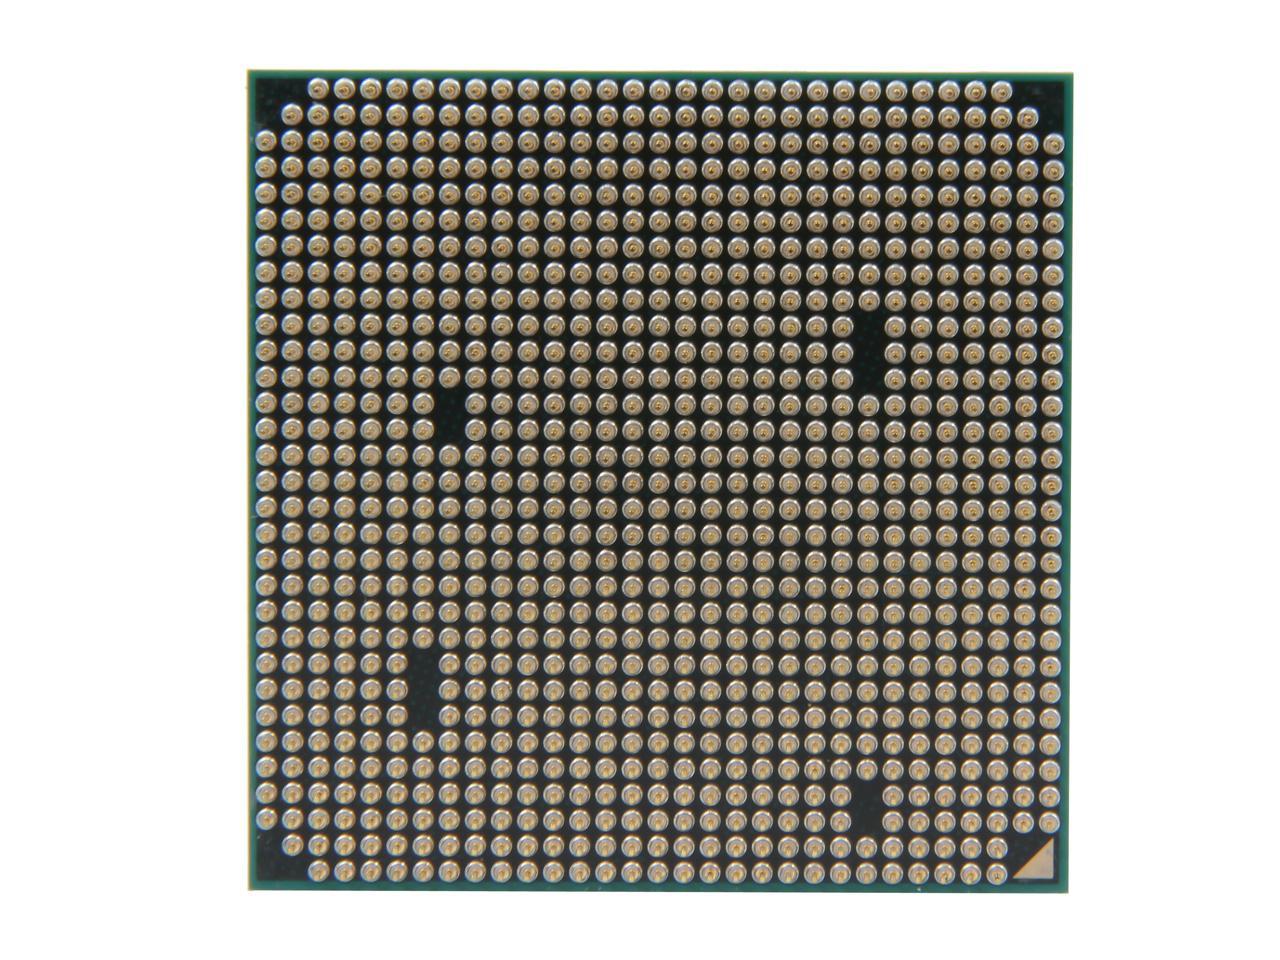 AMD Athlon II X2 255 Regor Dual-Core 3.1 GHz Socket AM3 65W ADX2550CK23GM Desktop Processor